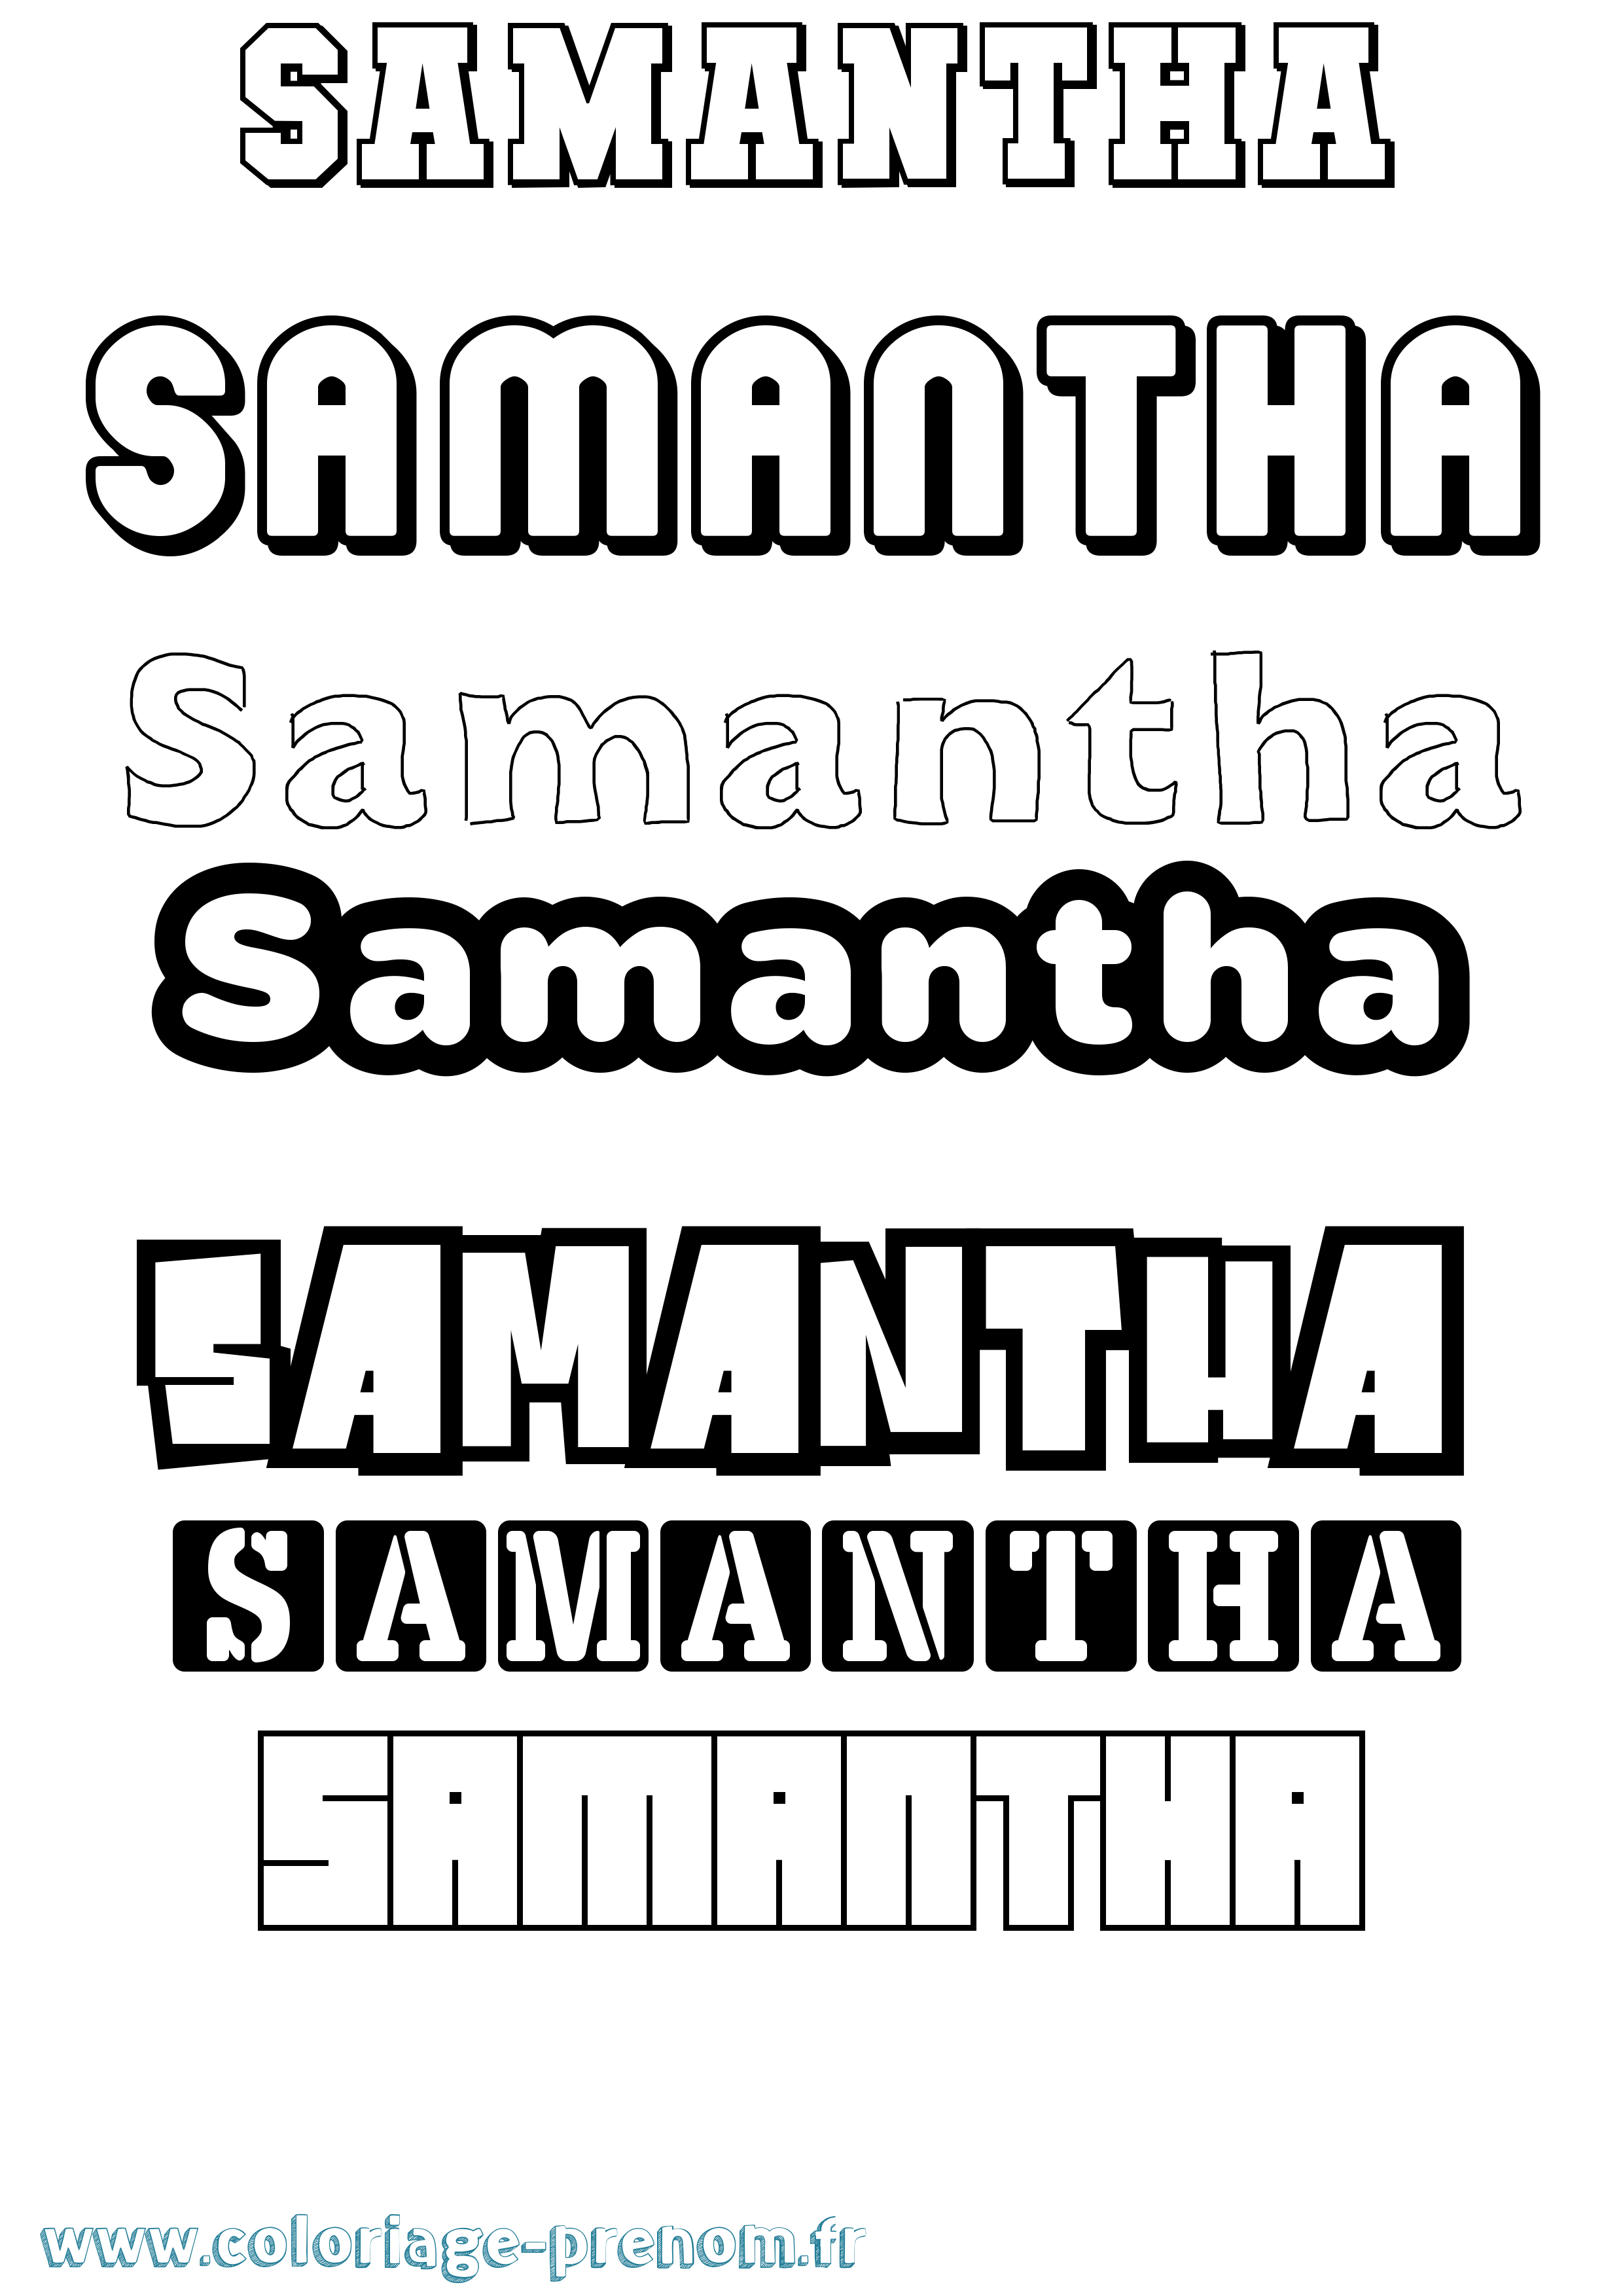 Coloriage prénom Samantha Simple